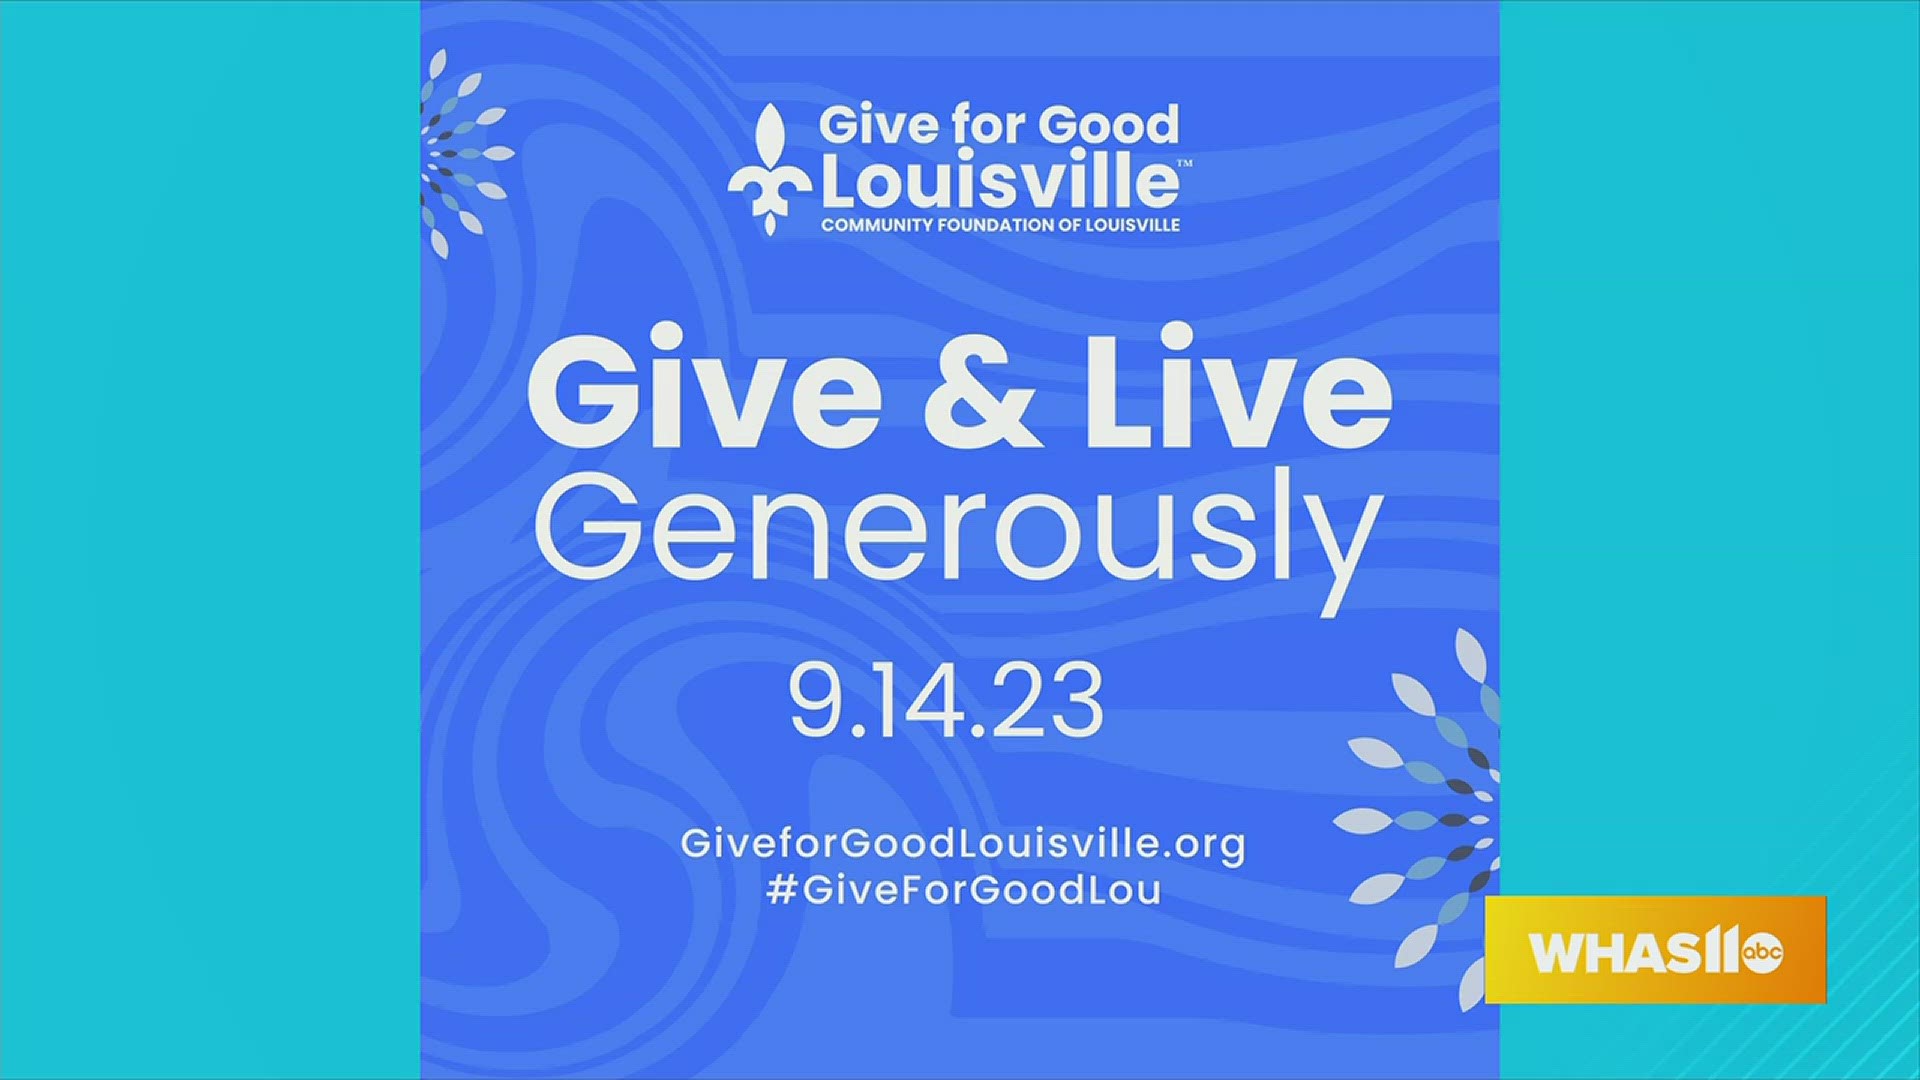 Learn more at giveforgoodlouisville.com